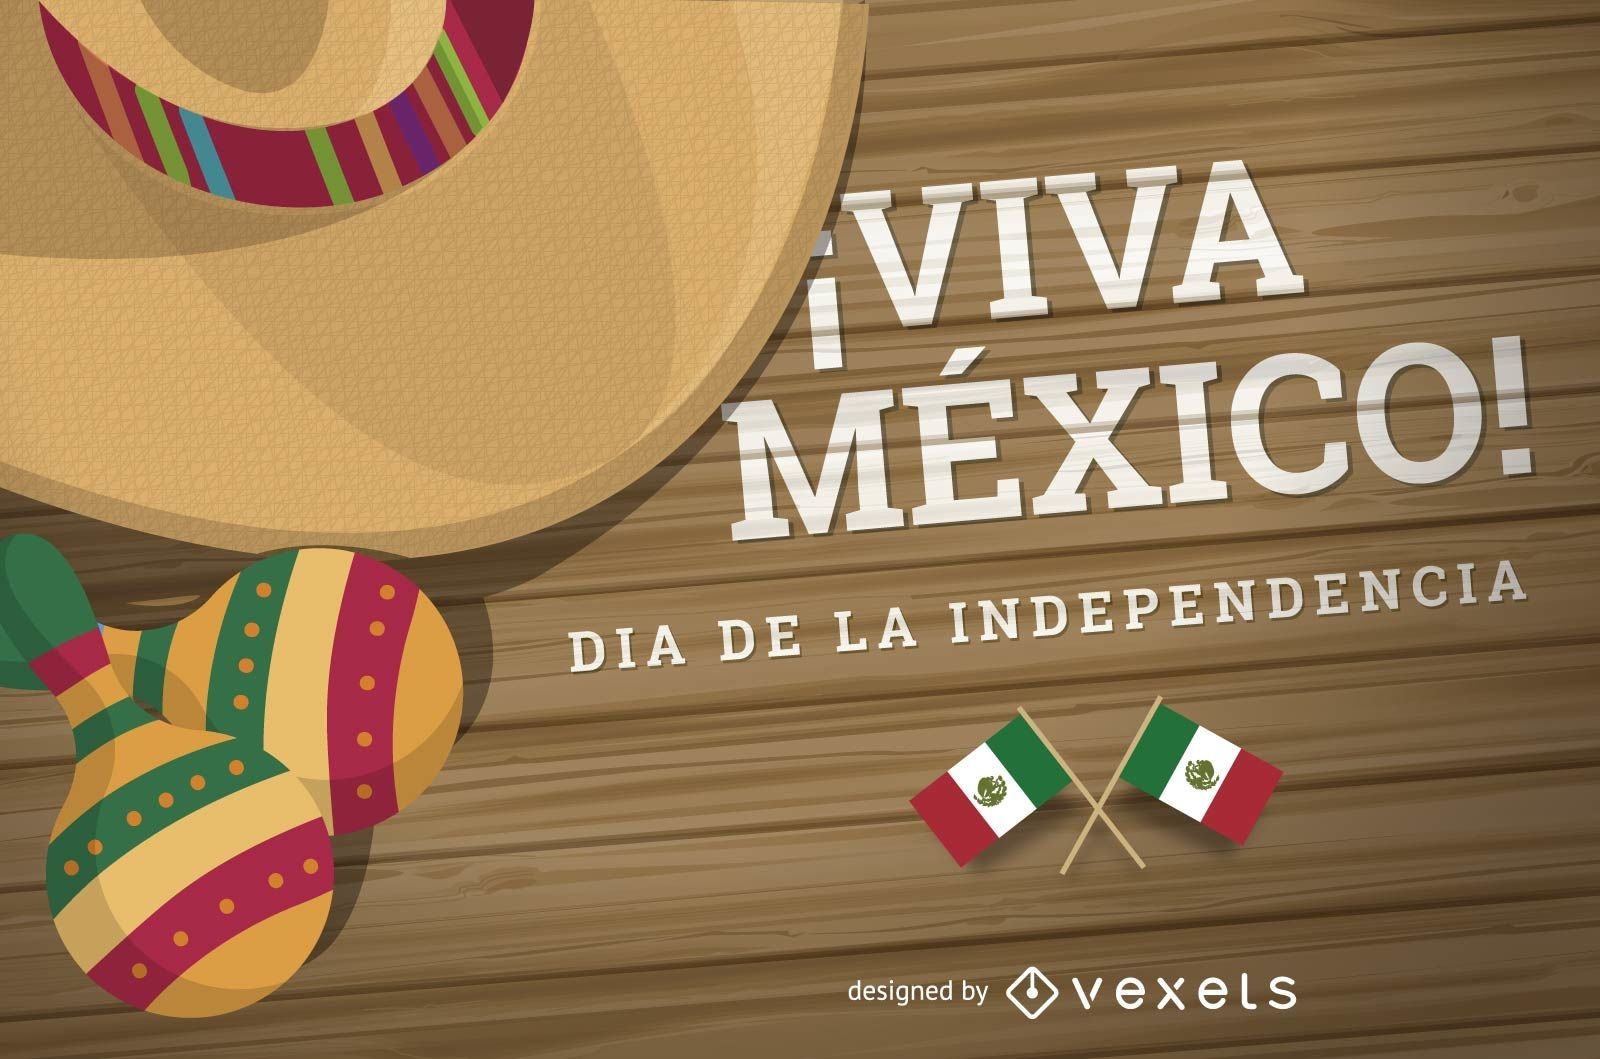 Dia de la Independencia México design